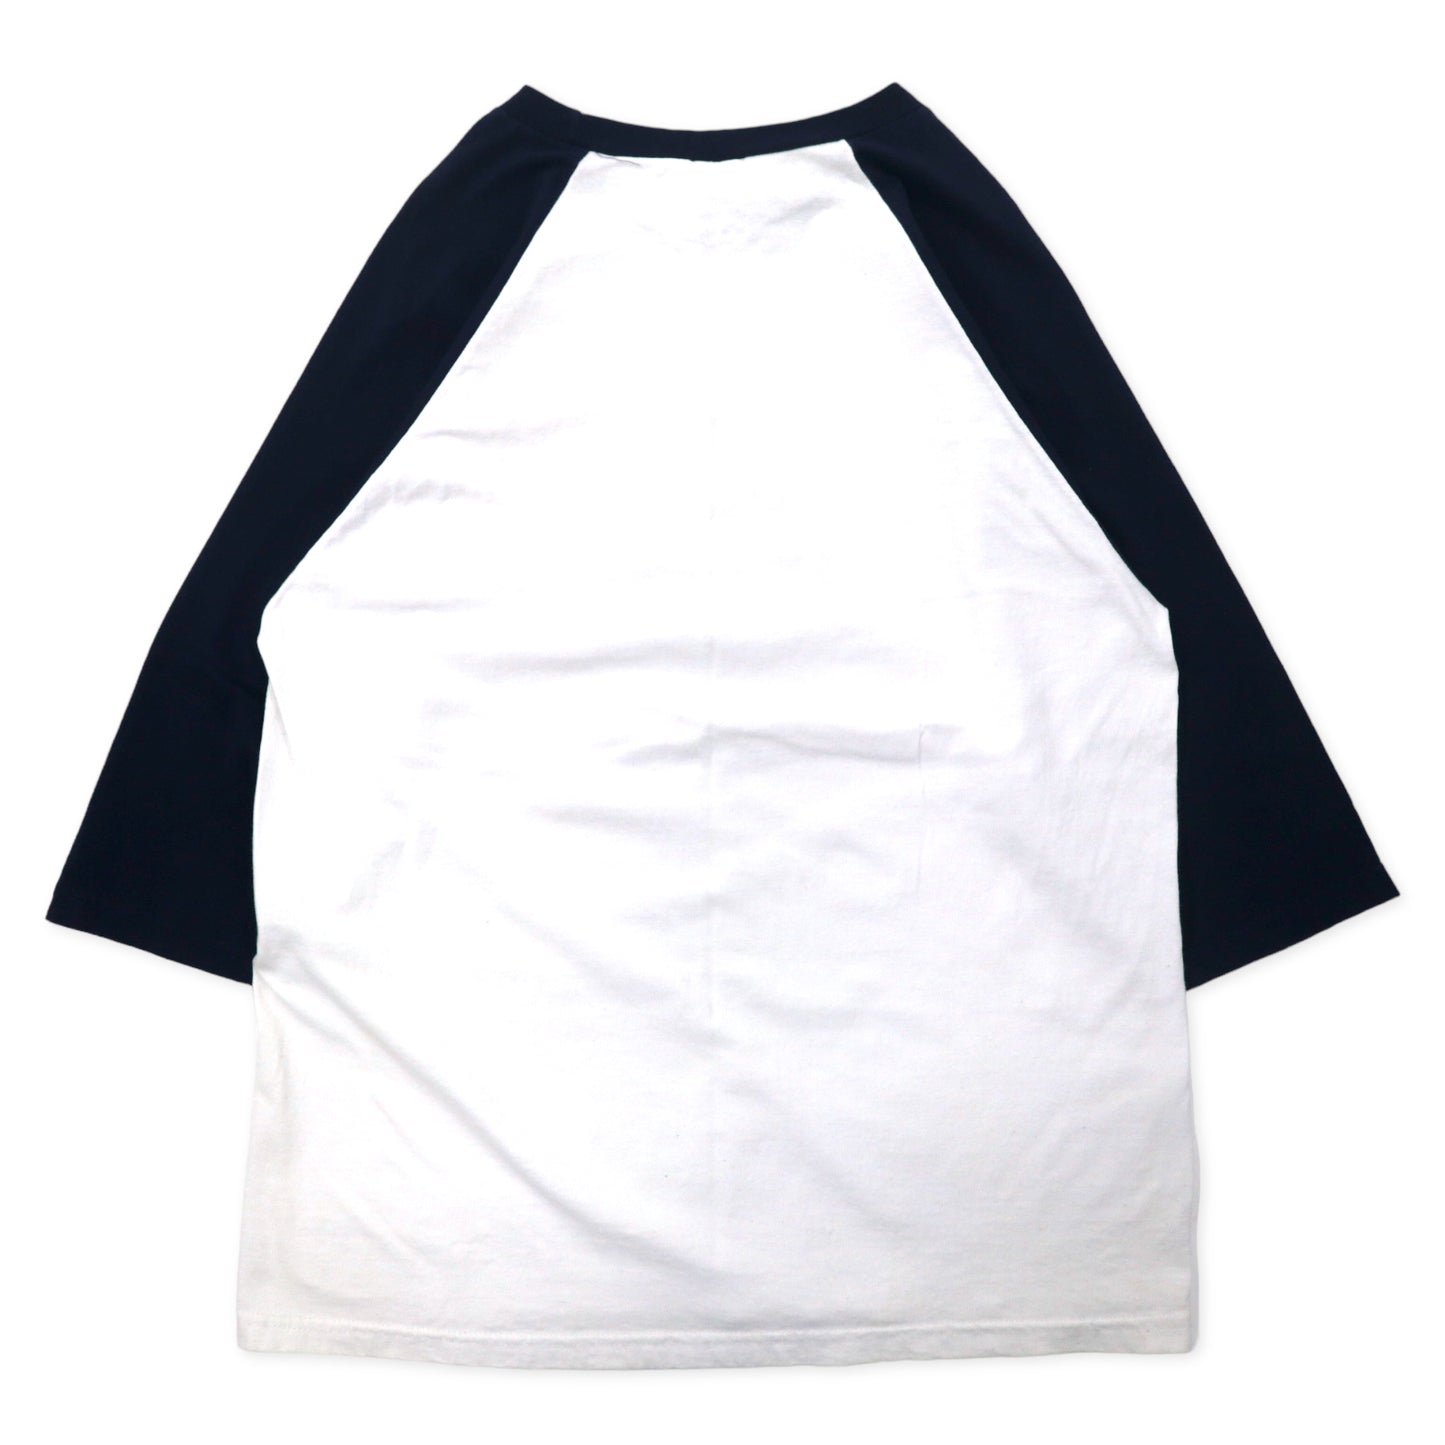 PRO CLUB USA製 ラグランTシャツ XL ホワイト ネイビー コットン